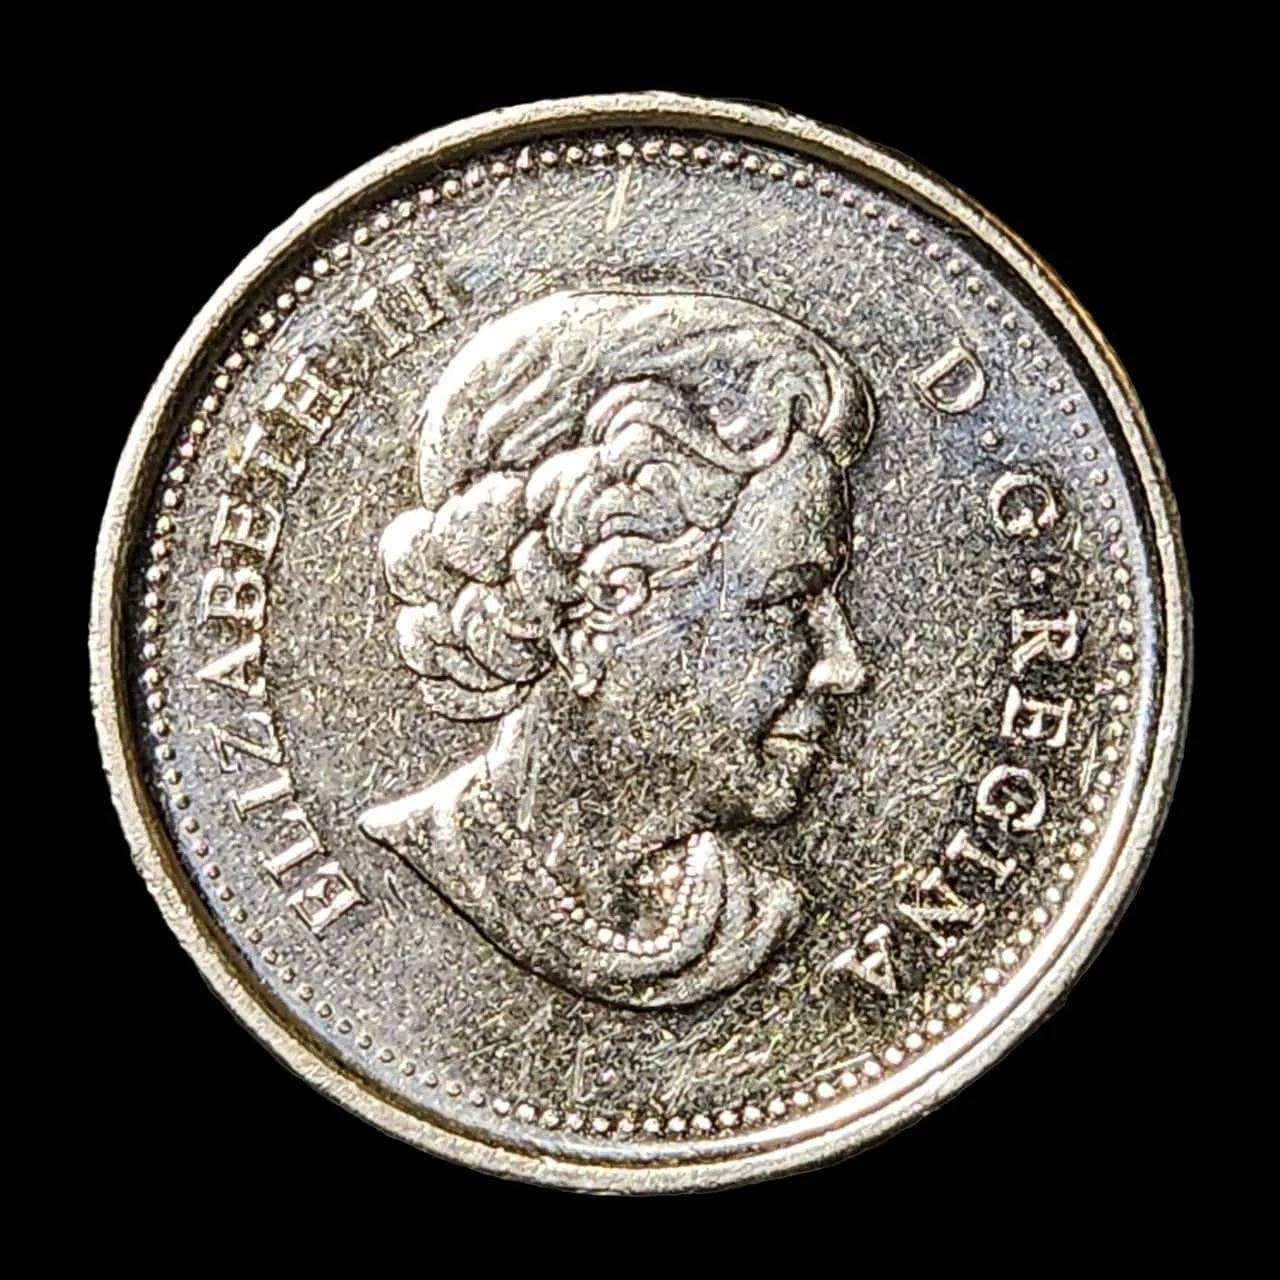 Canada 25 cents coin featuring an falcon.